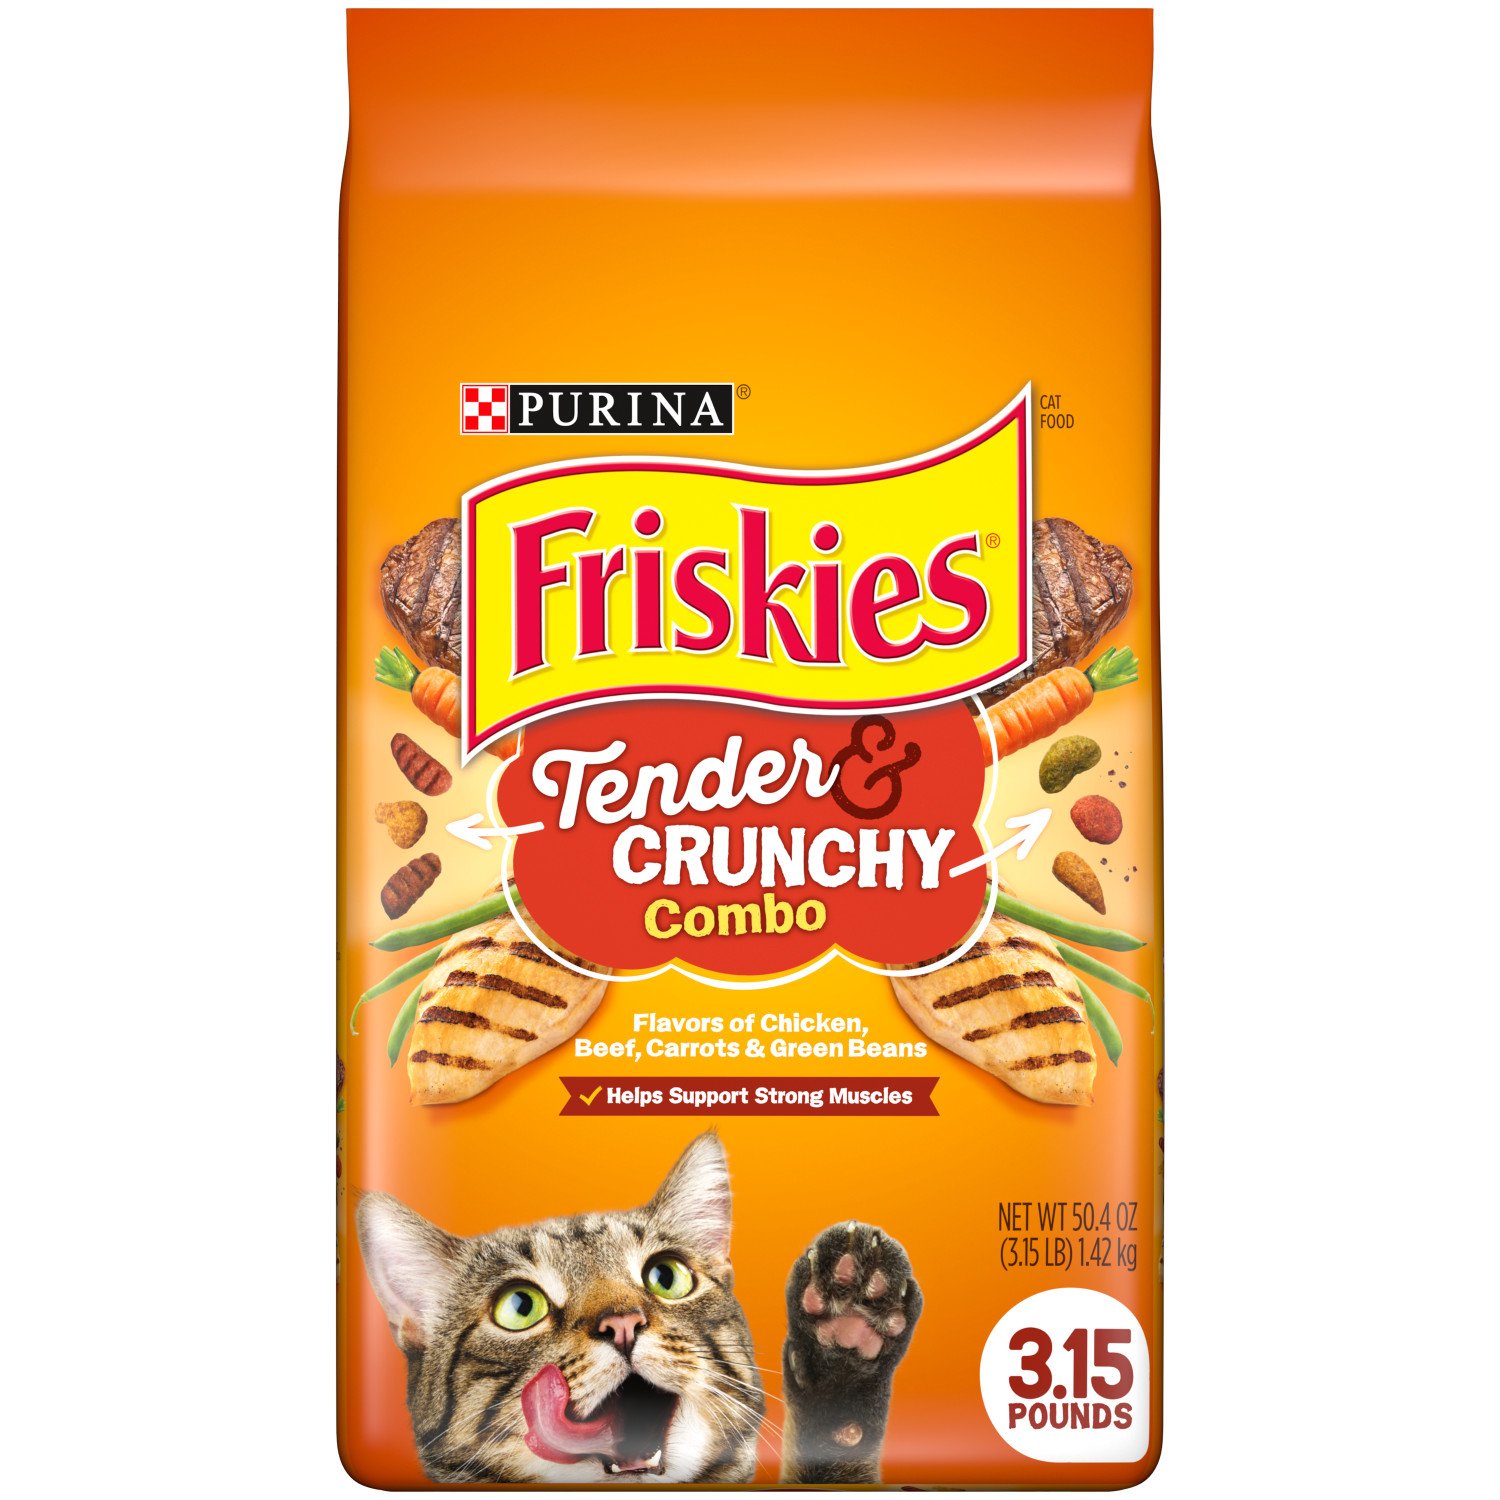 Purina Friskies Tender & Crunchy Combo Cat Food Shop Cats at HEB